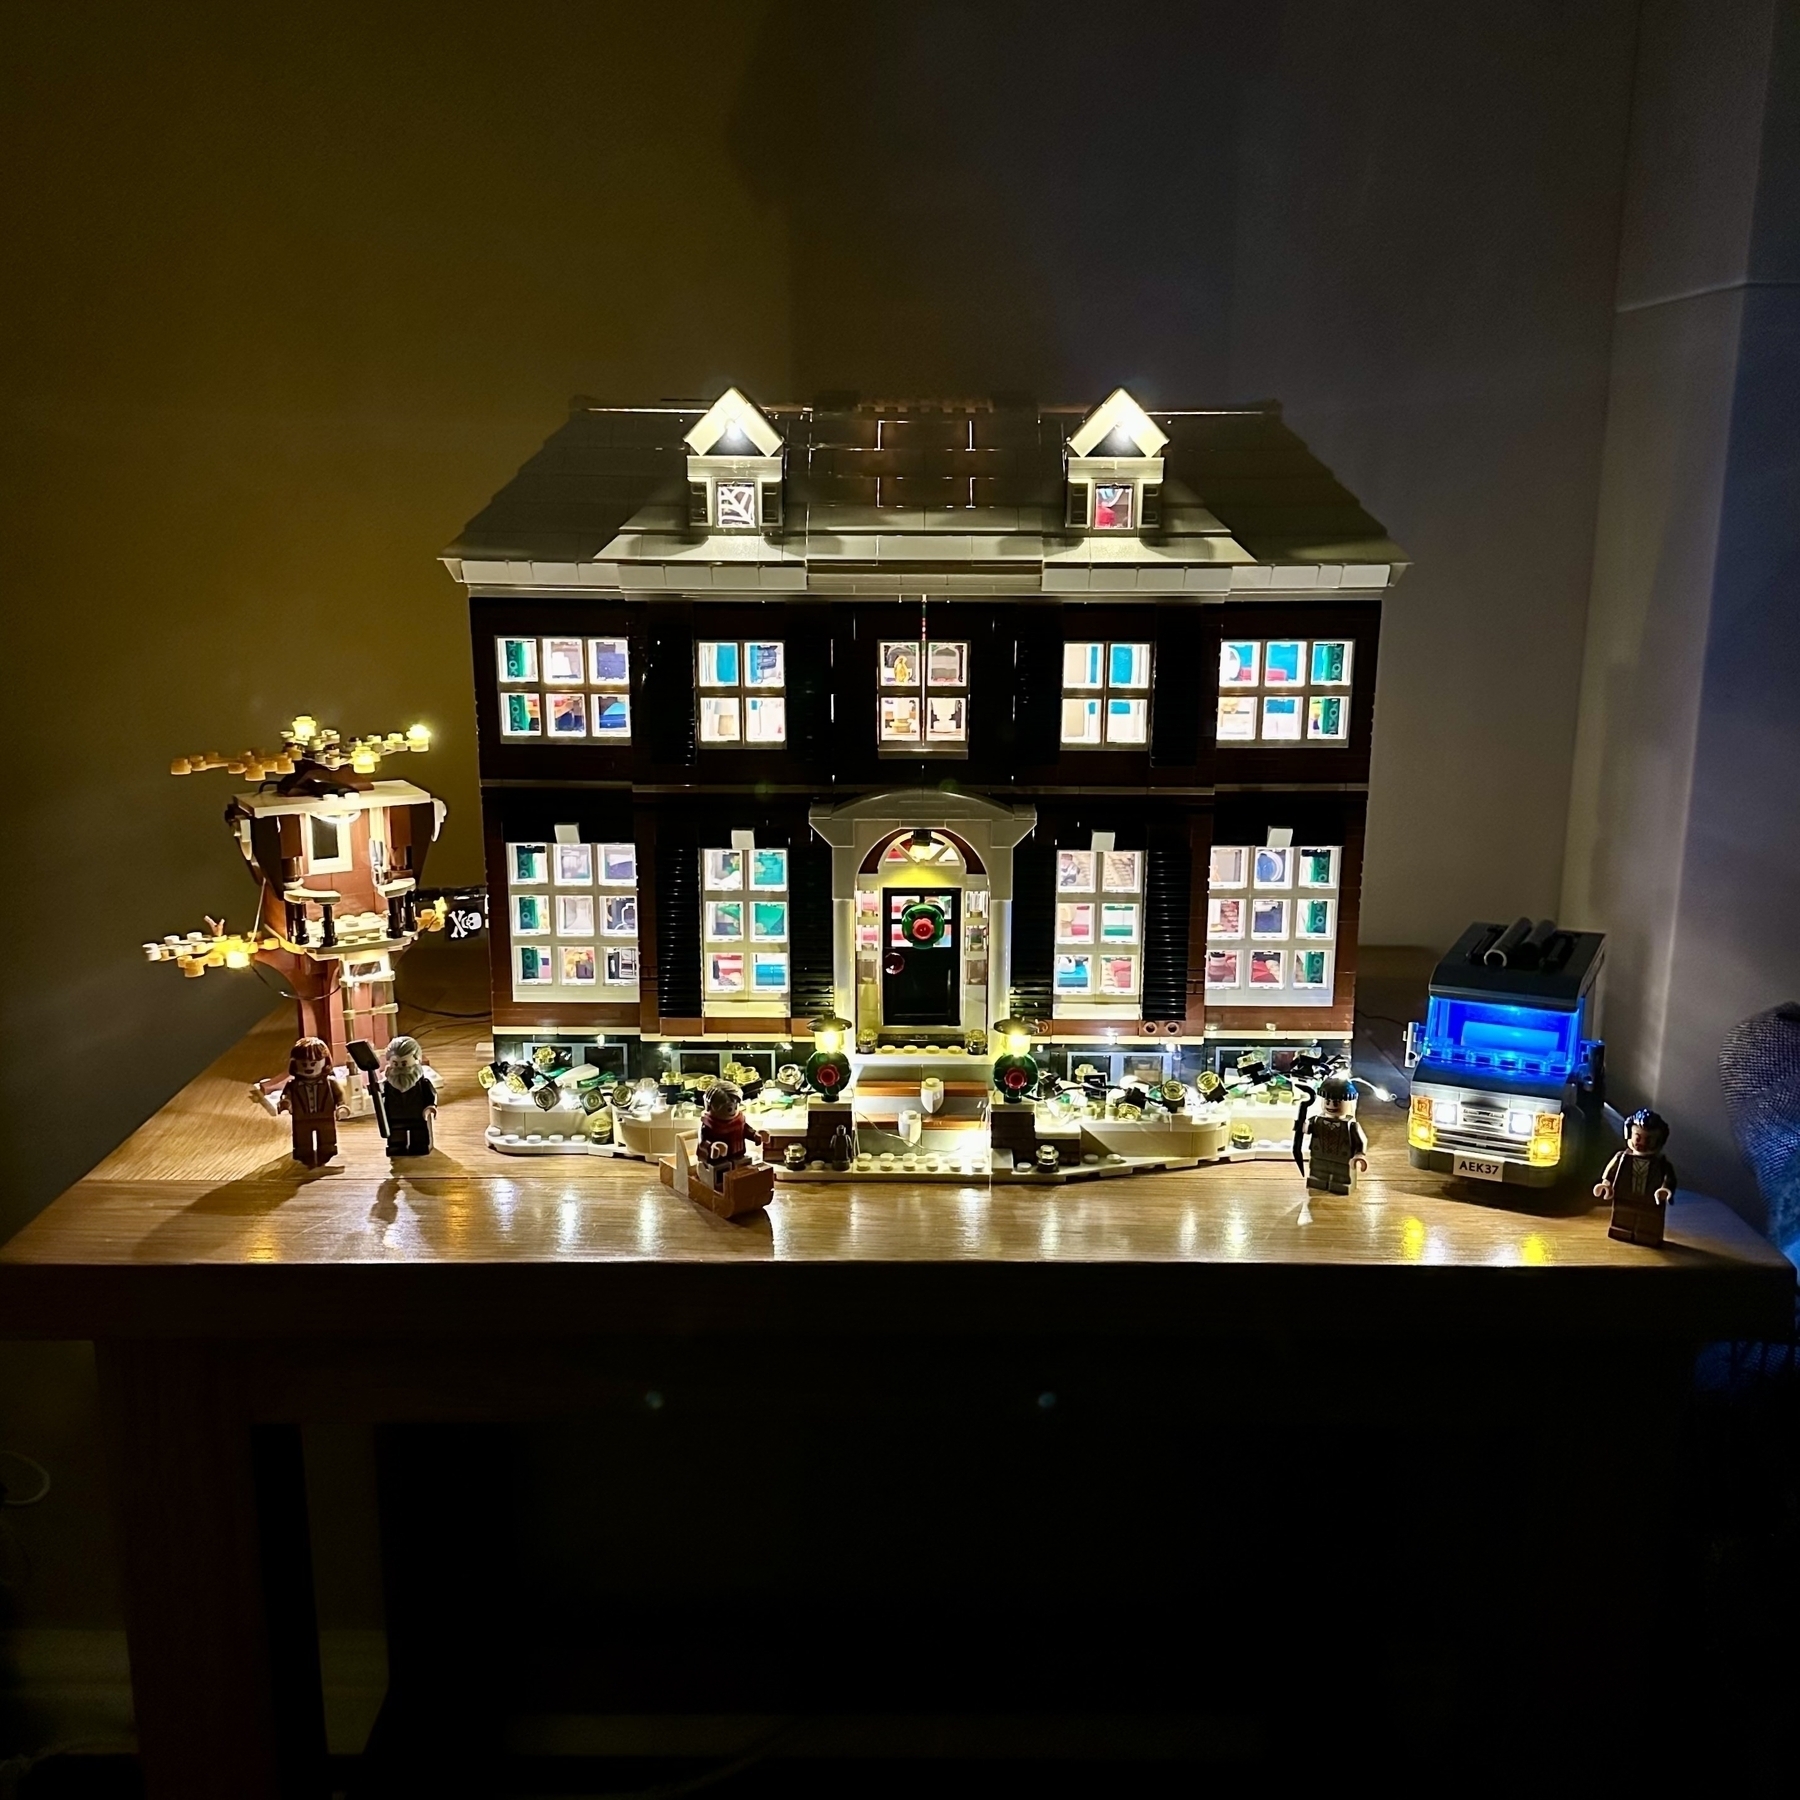 The Home Alone Lego set illuminated on a small table.